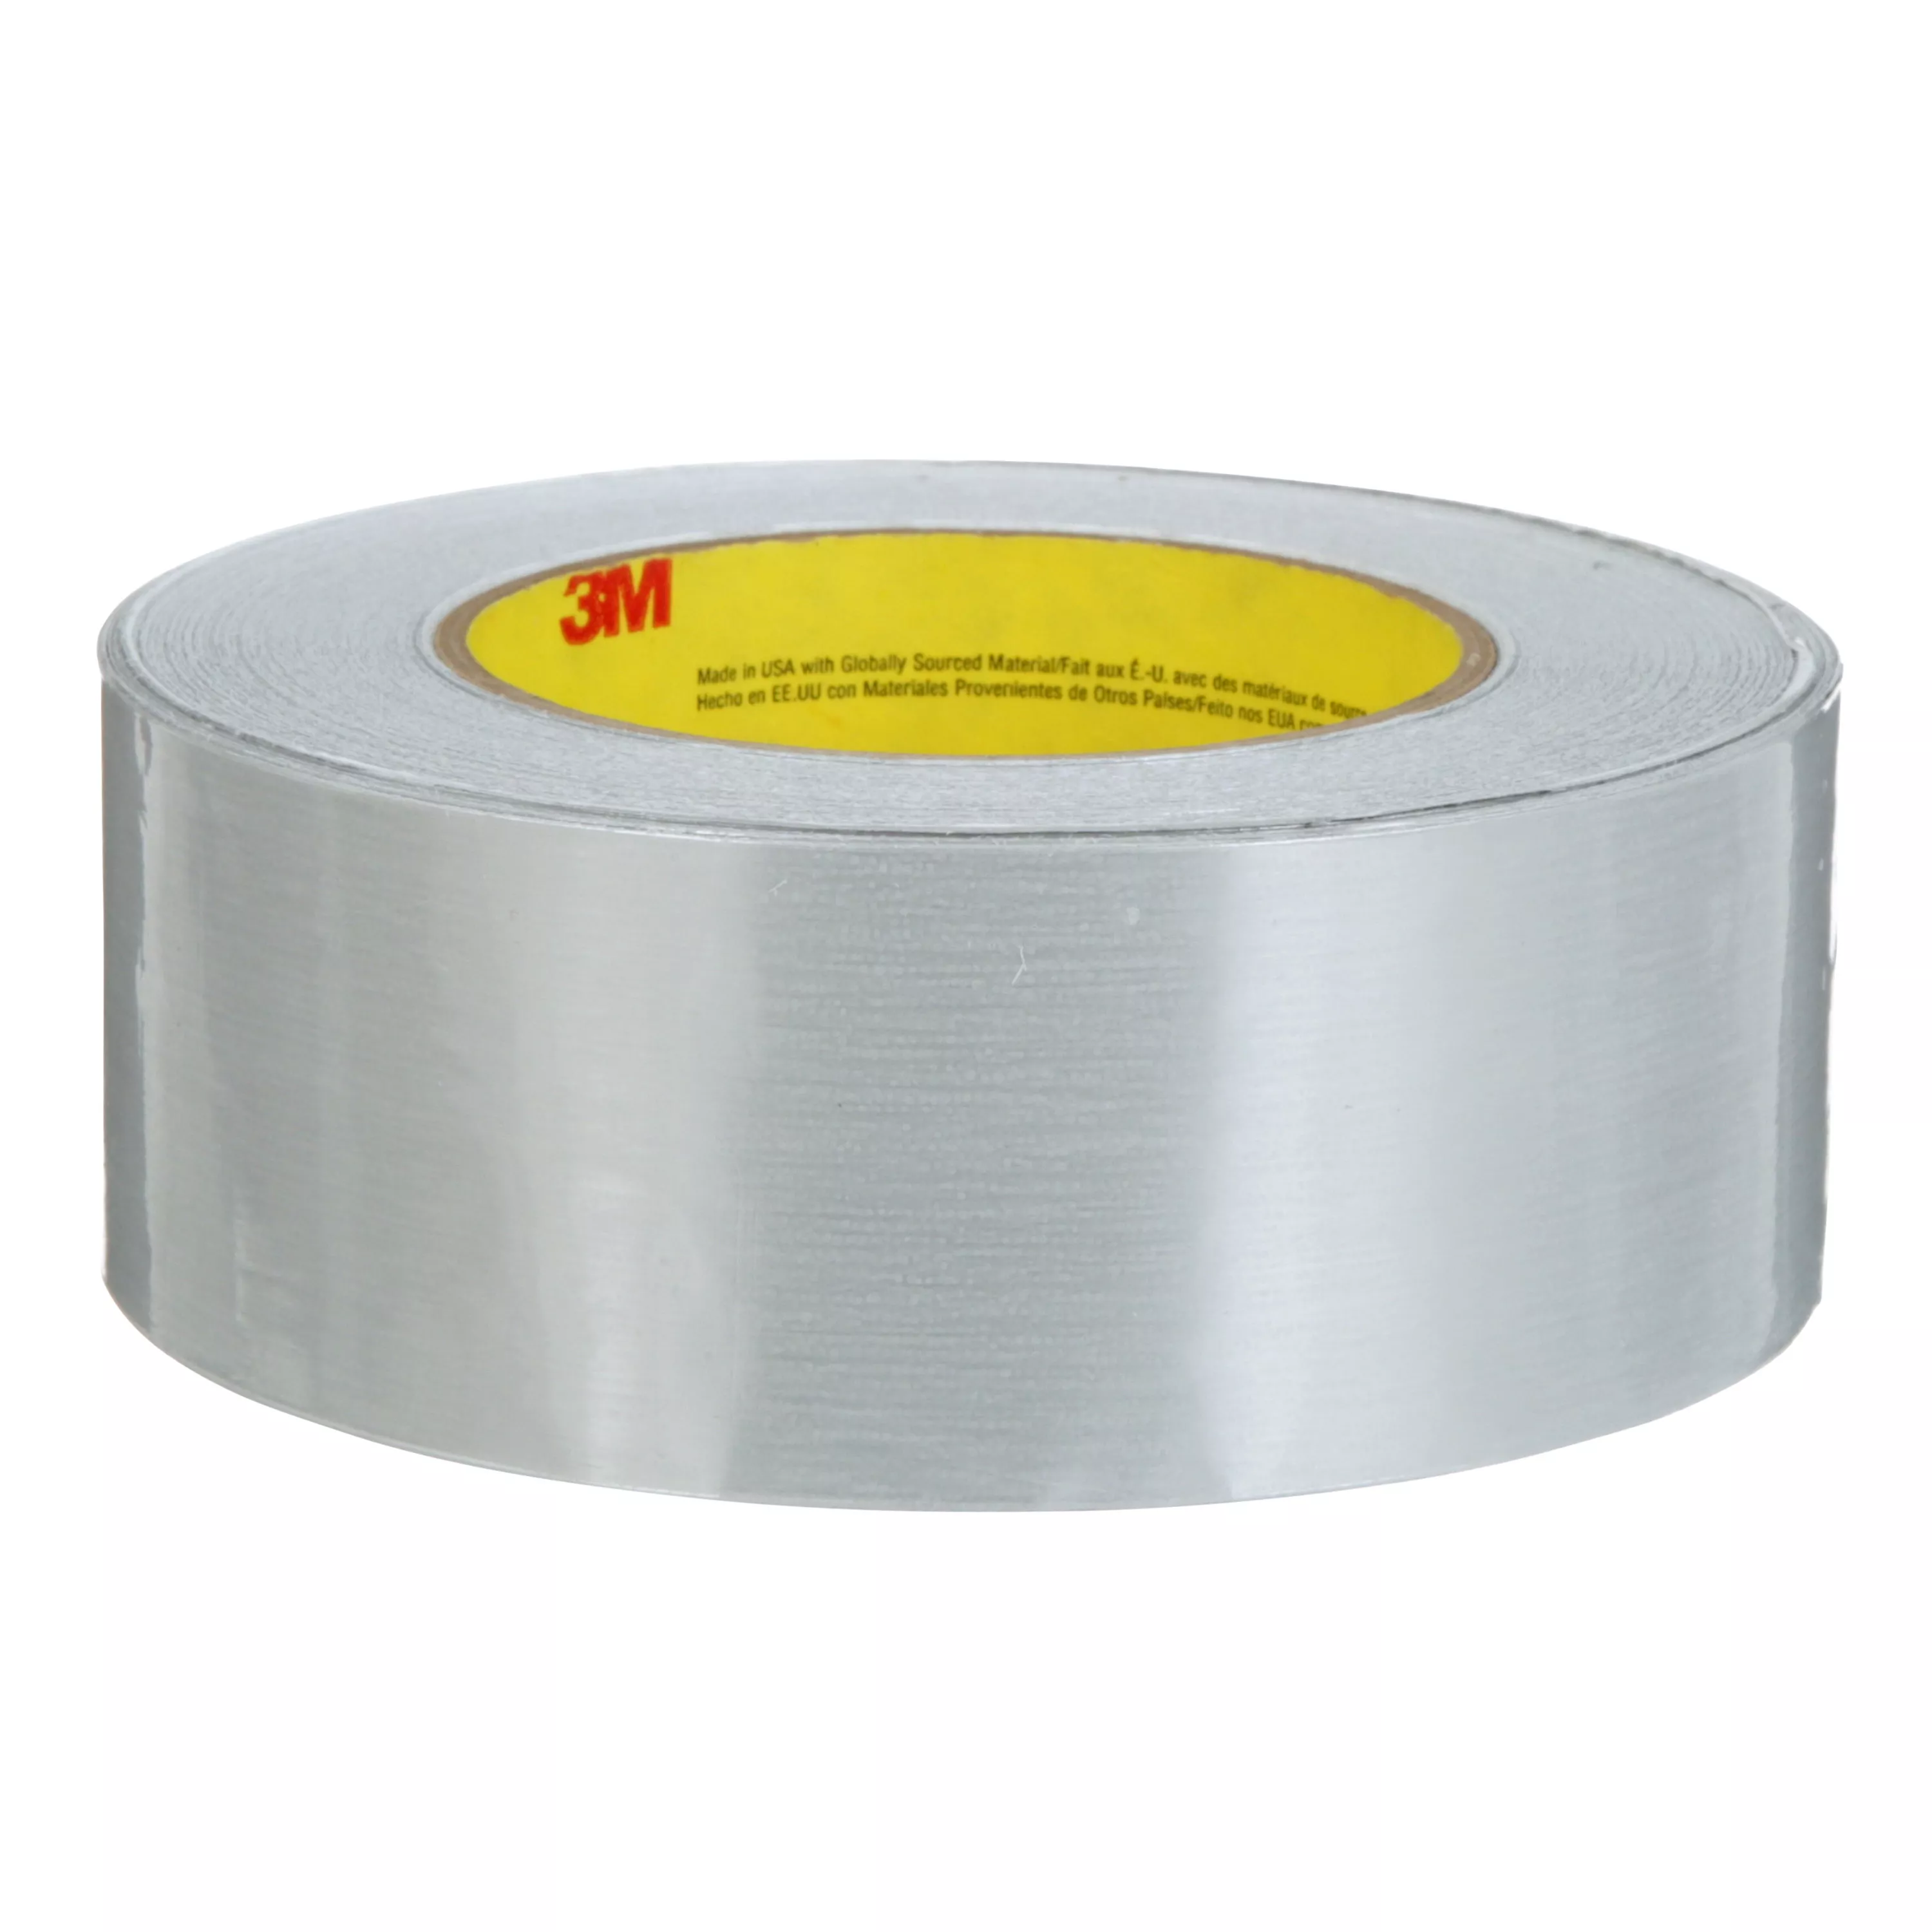 SKU 7000049897 | 3M™ Venture Tape™ Cryogenic Vapor Barrier Tape 1555CW